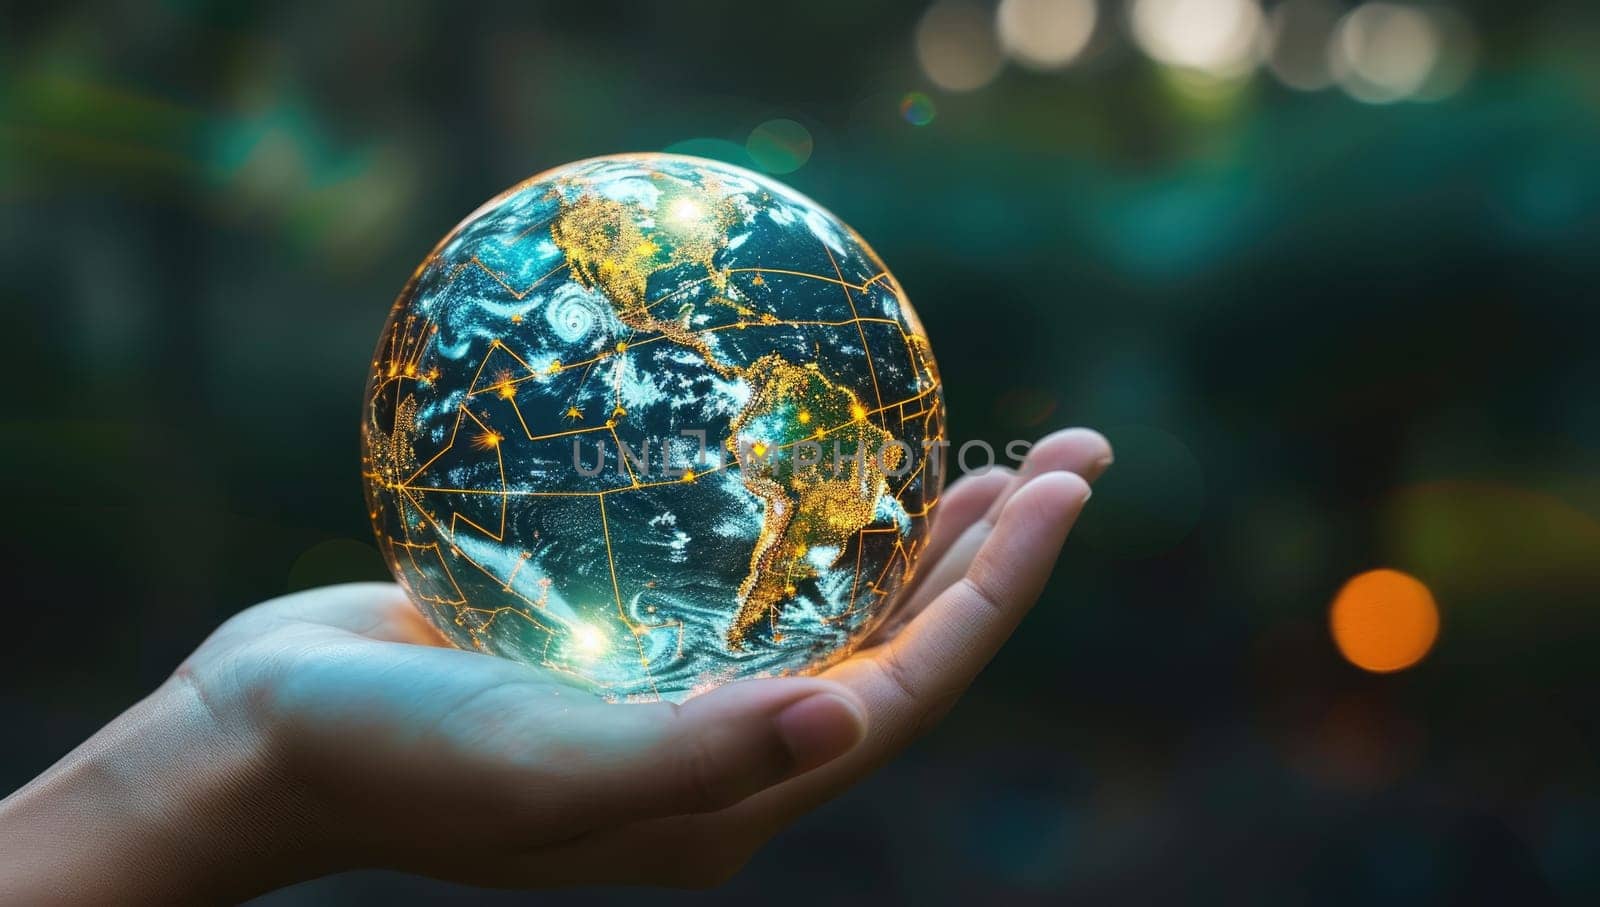 Hand holding illuminated Earth globe against bokeh background